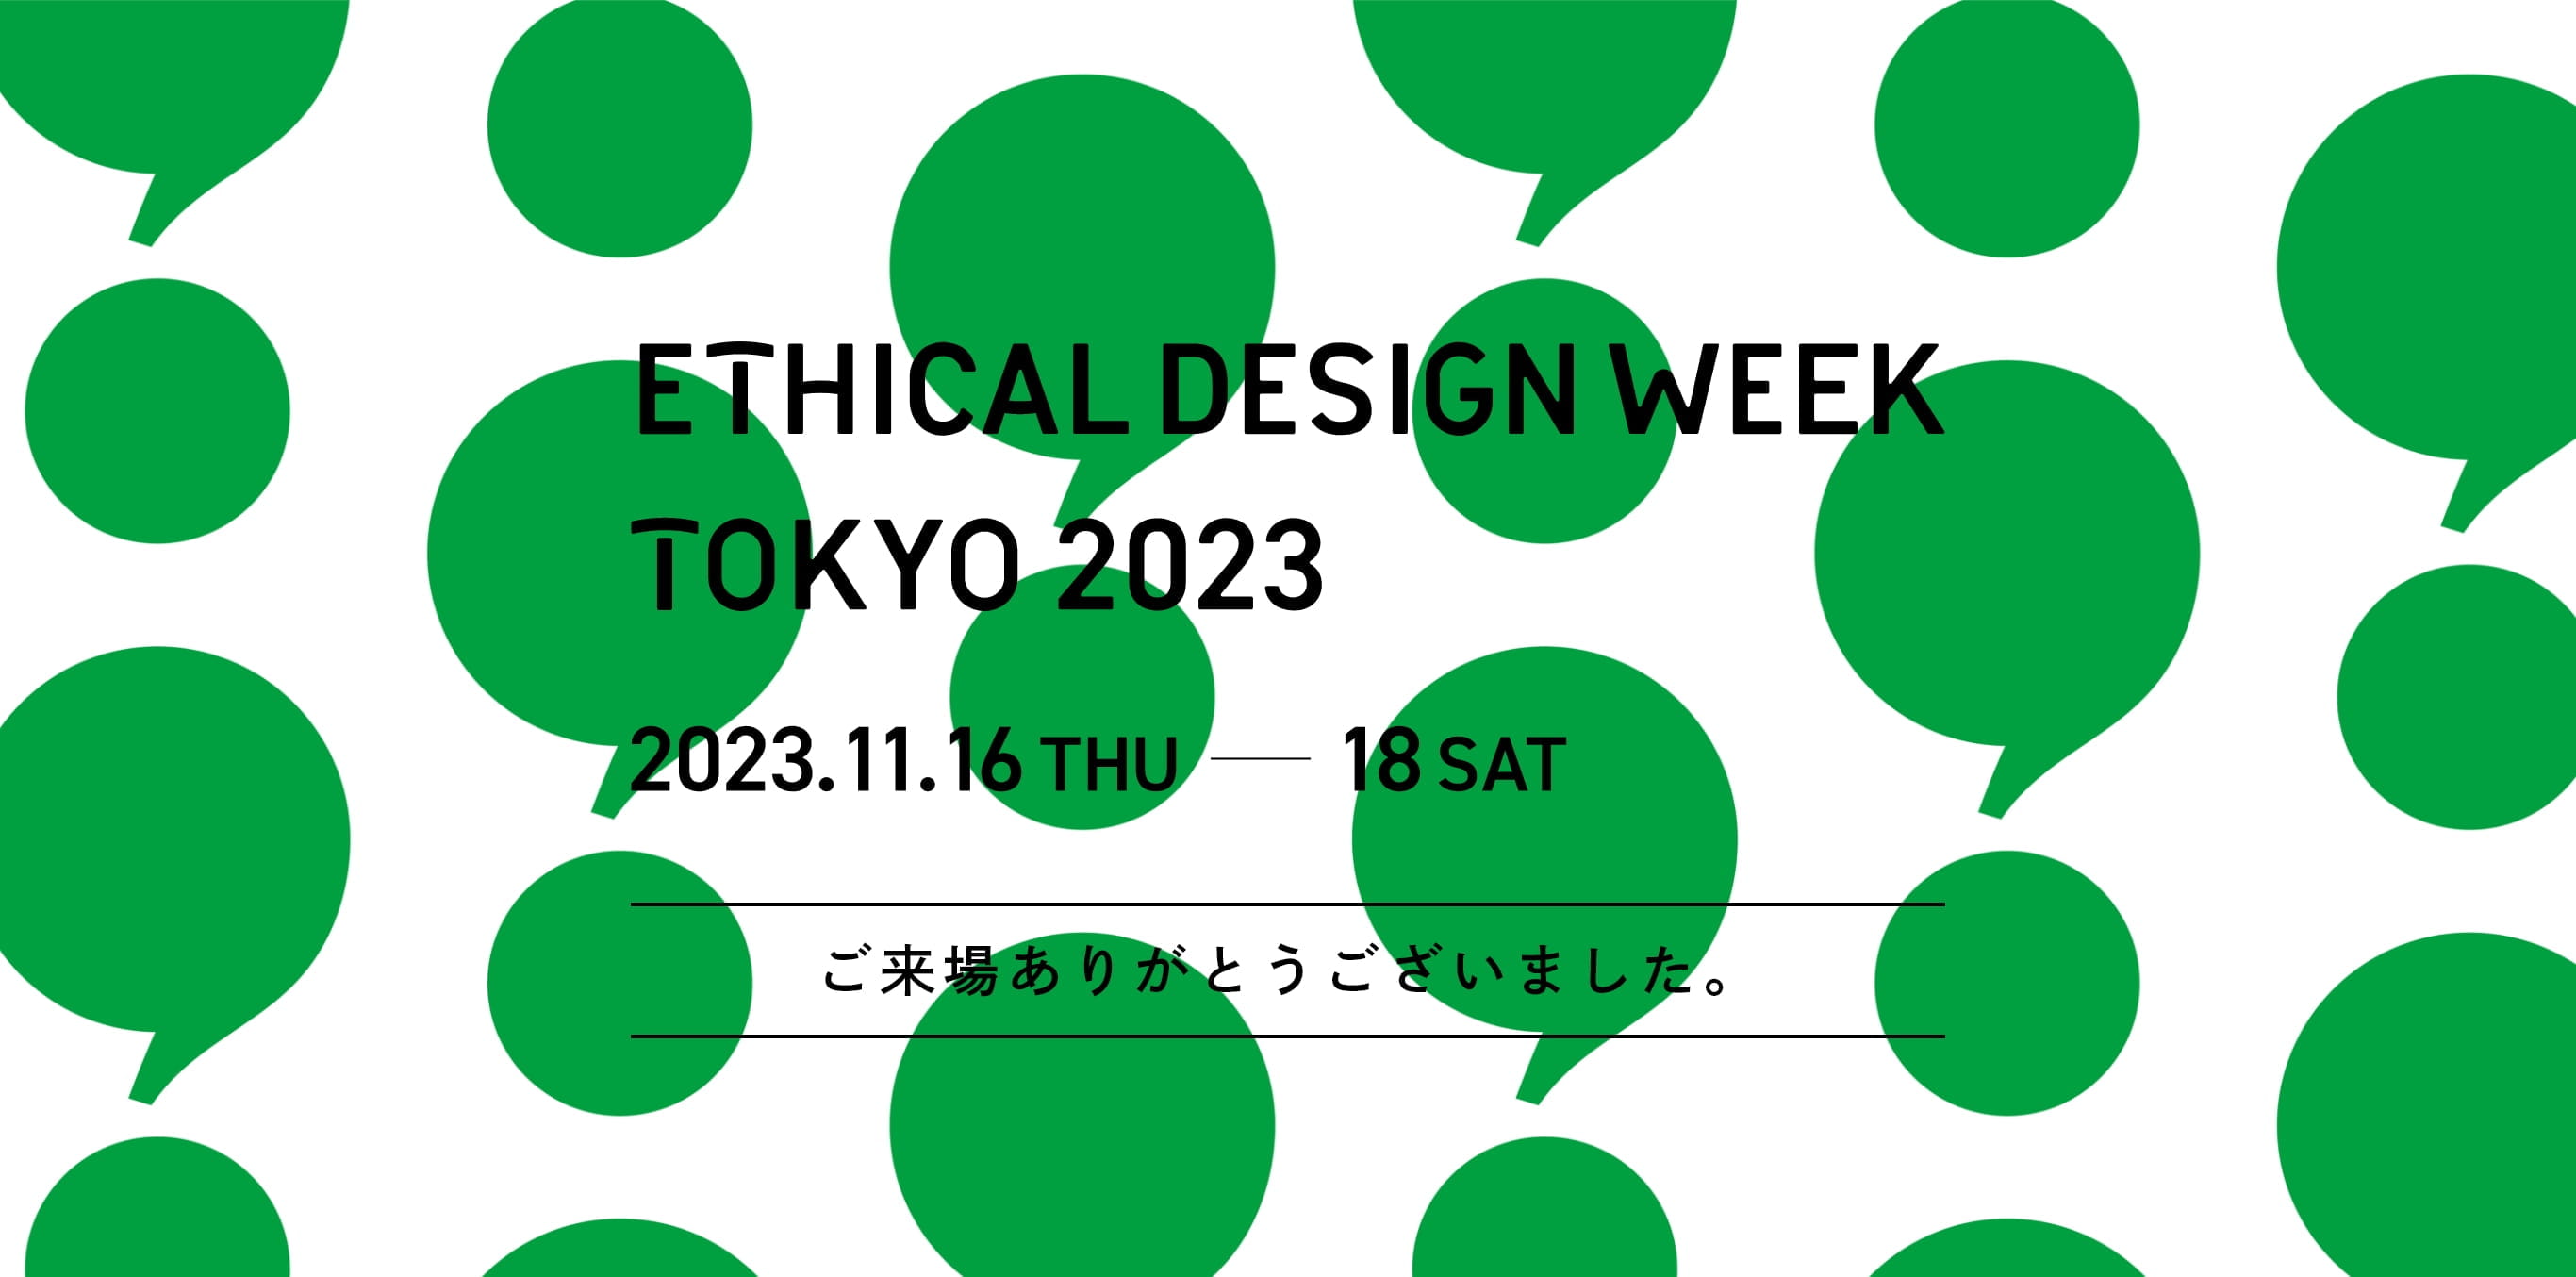 ETHICAL DESIGN WEEK TOKYO